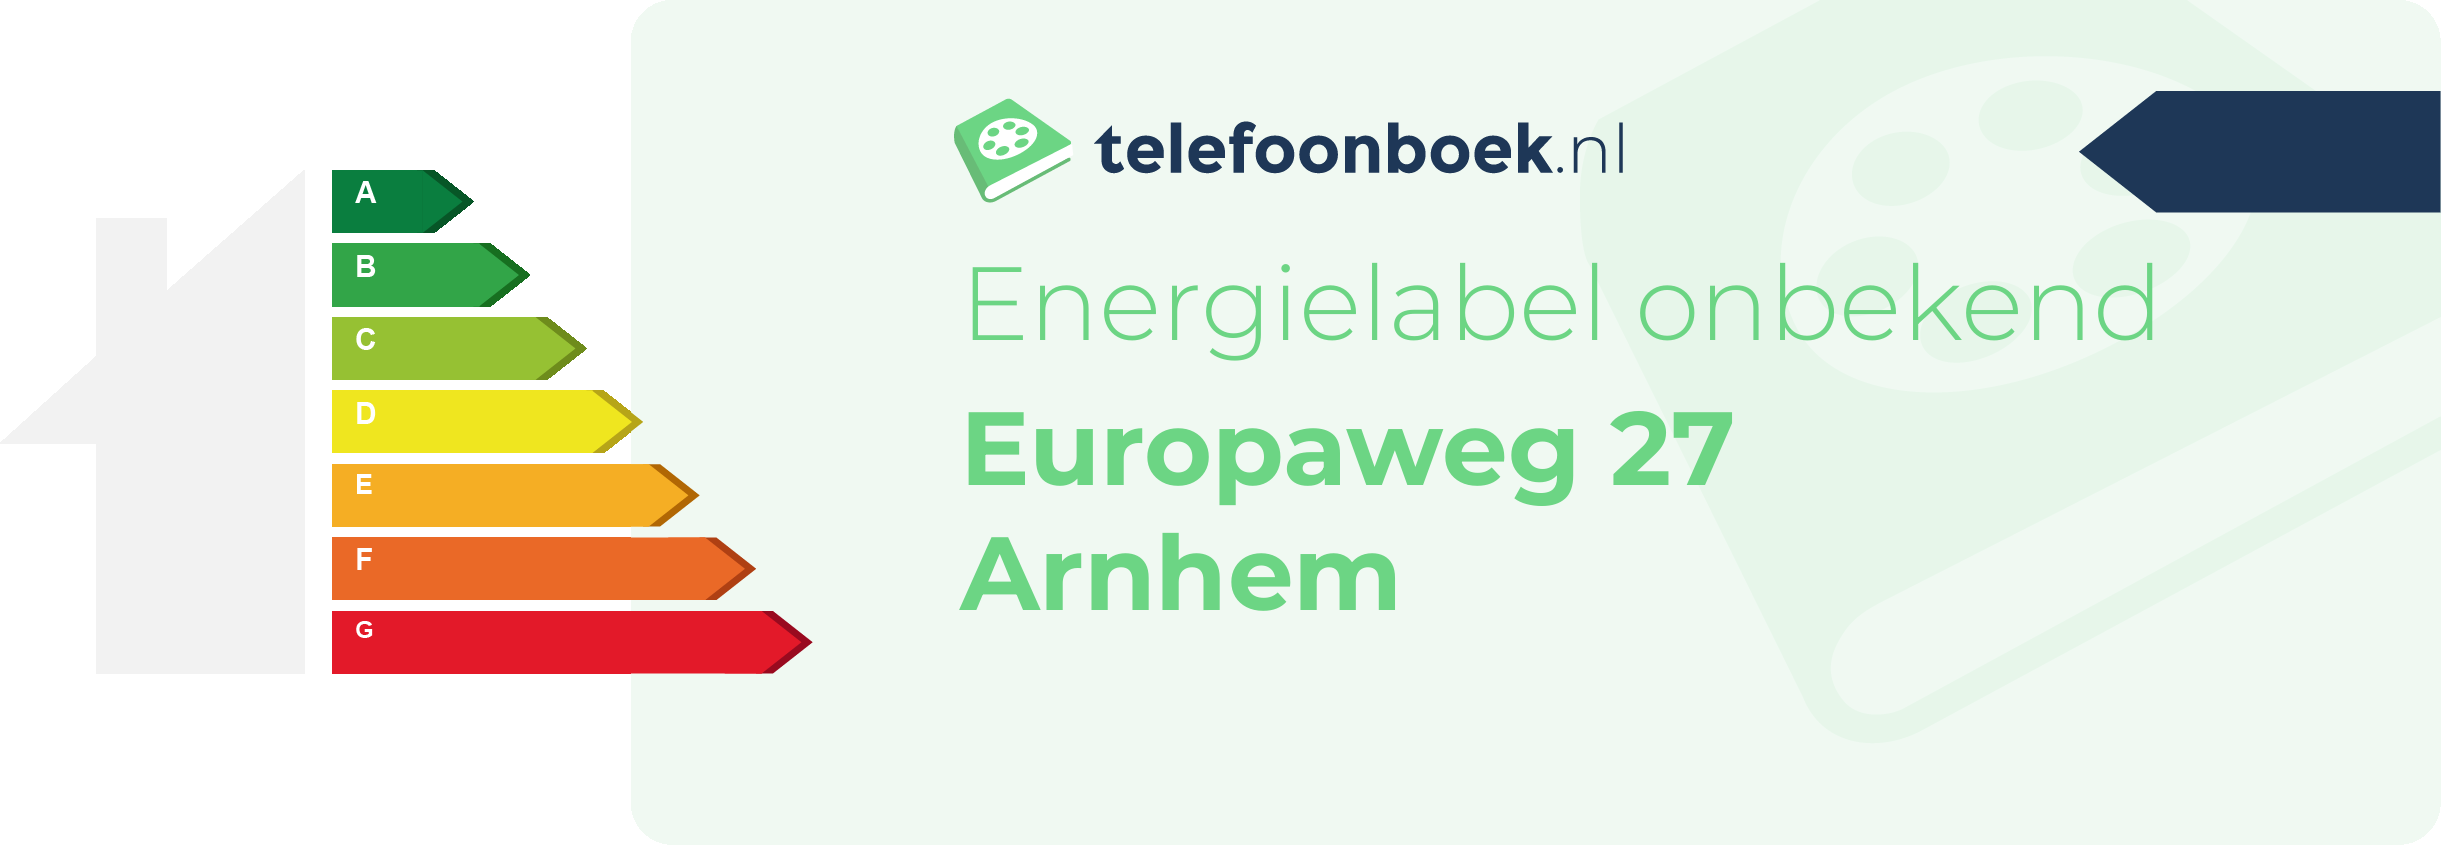 Energielabel Europaweg 27 Arnhem